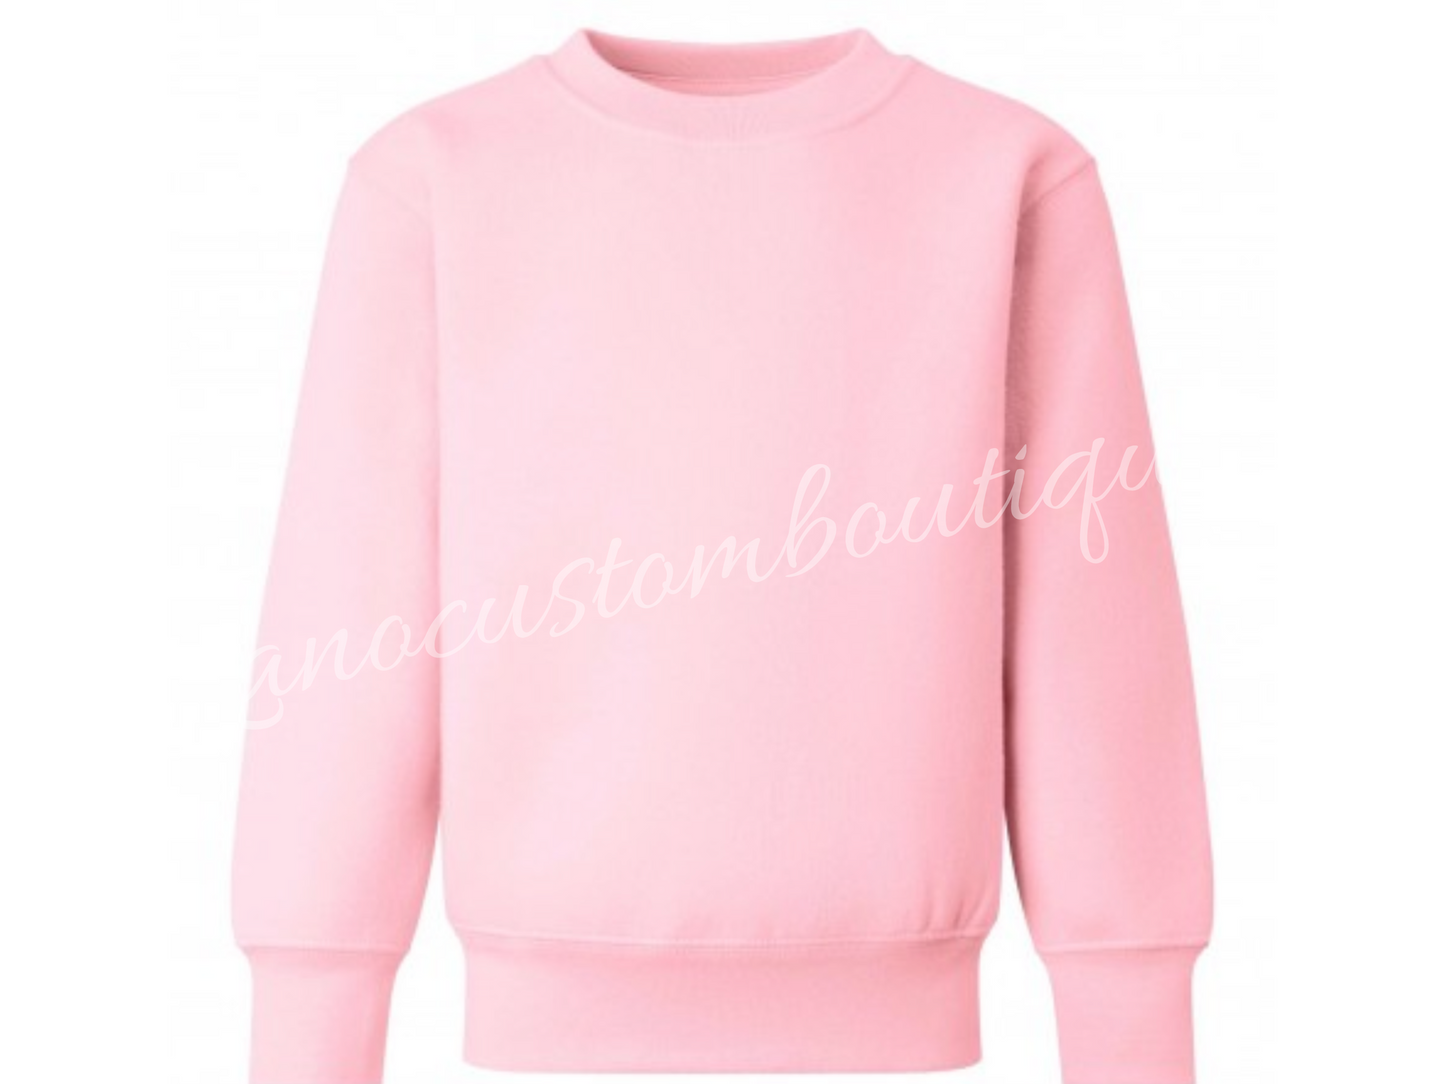 Embroidered Girls Sweatshirt, Cute Cat Embroidered Sweatshirt, Pink Crew Neck Sweatshirt